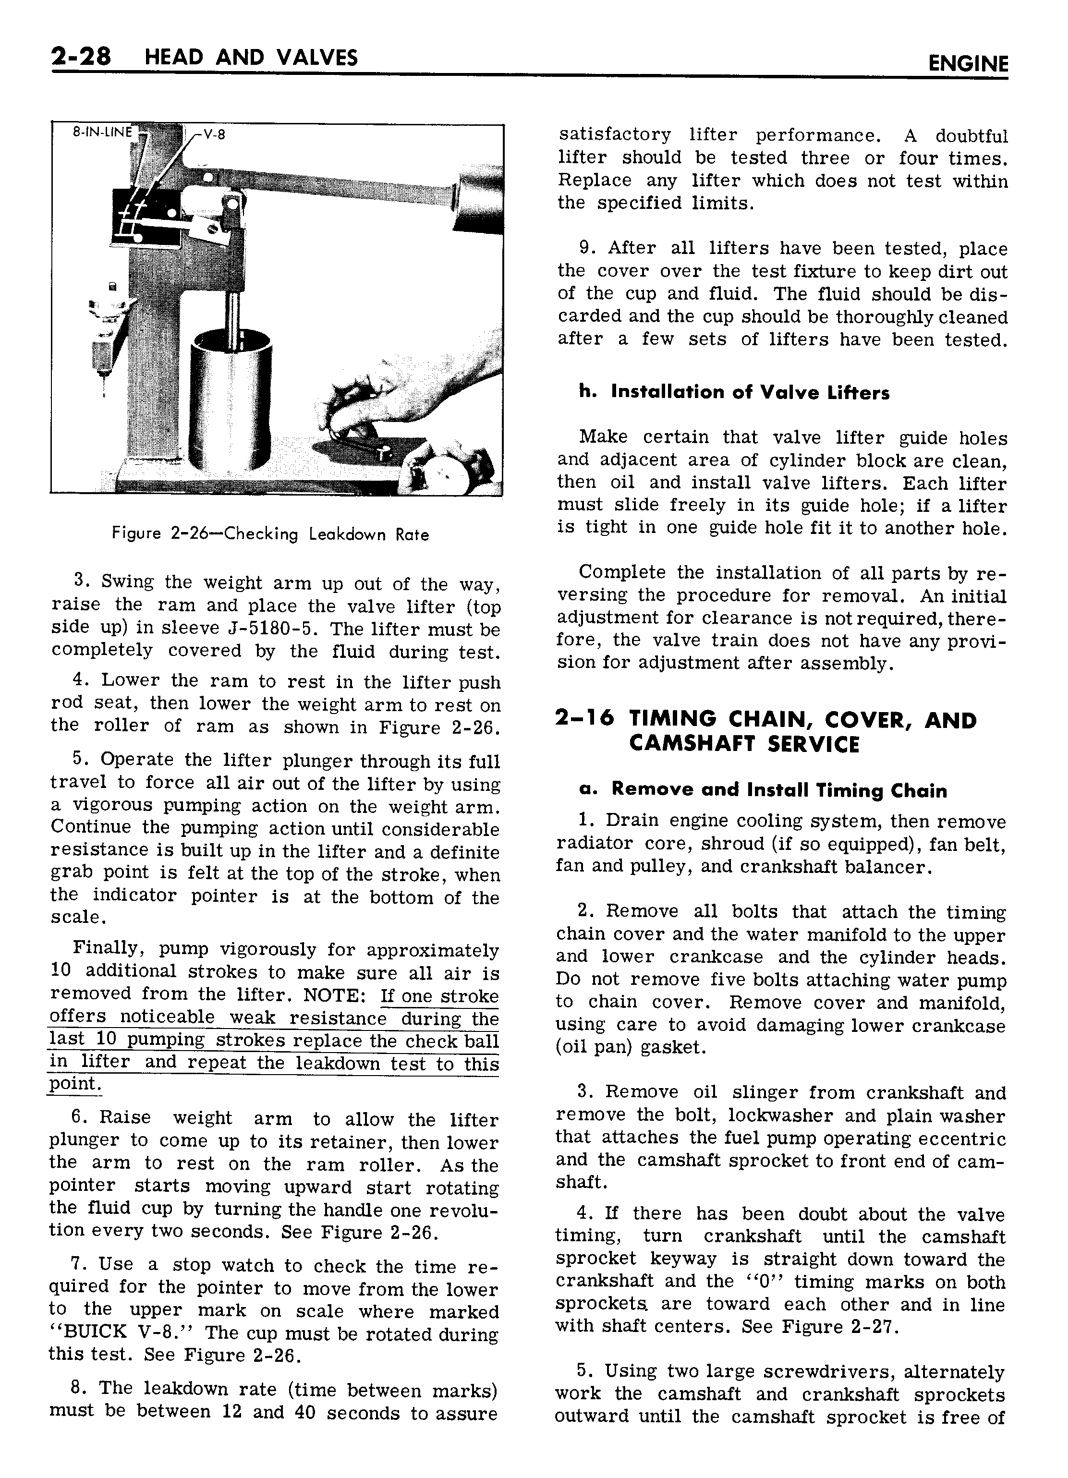 n_03 1961 Buick Shop Manual - Engine-028-028.jpg